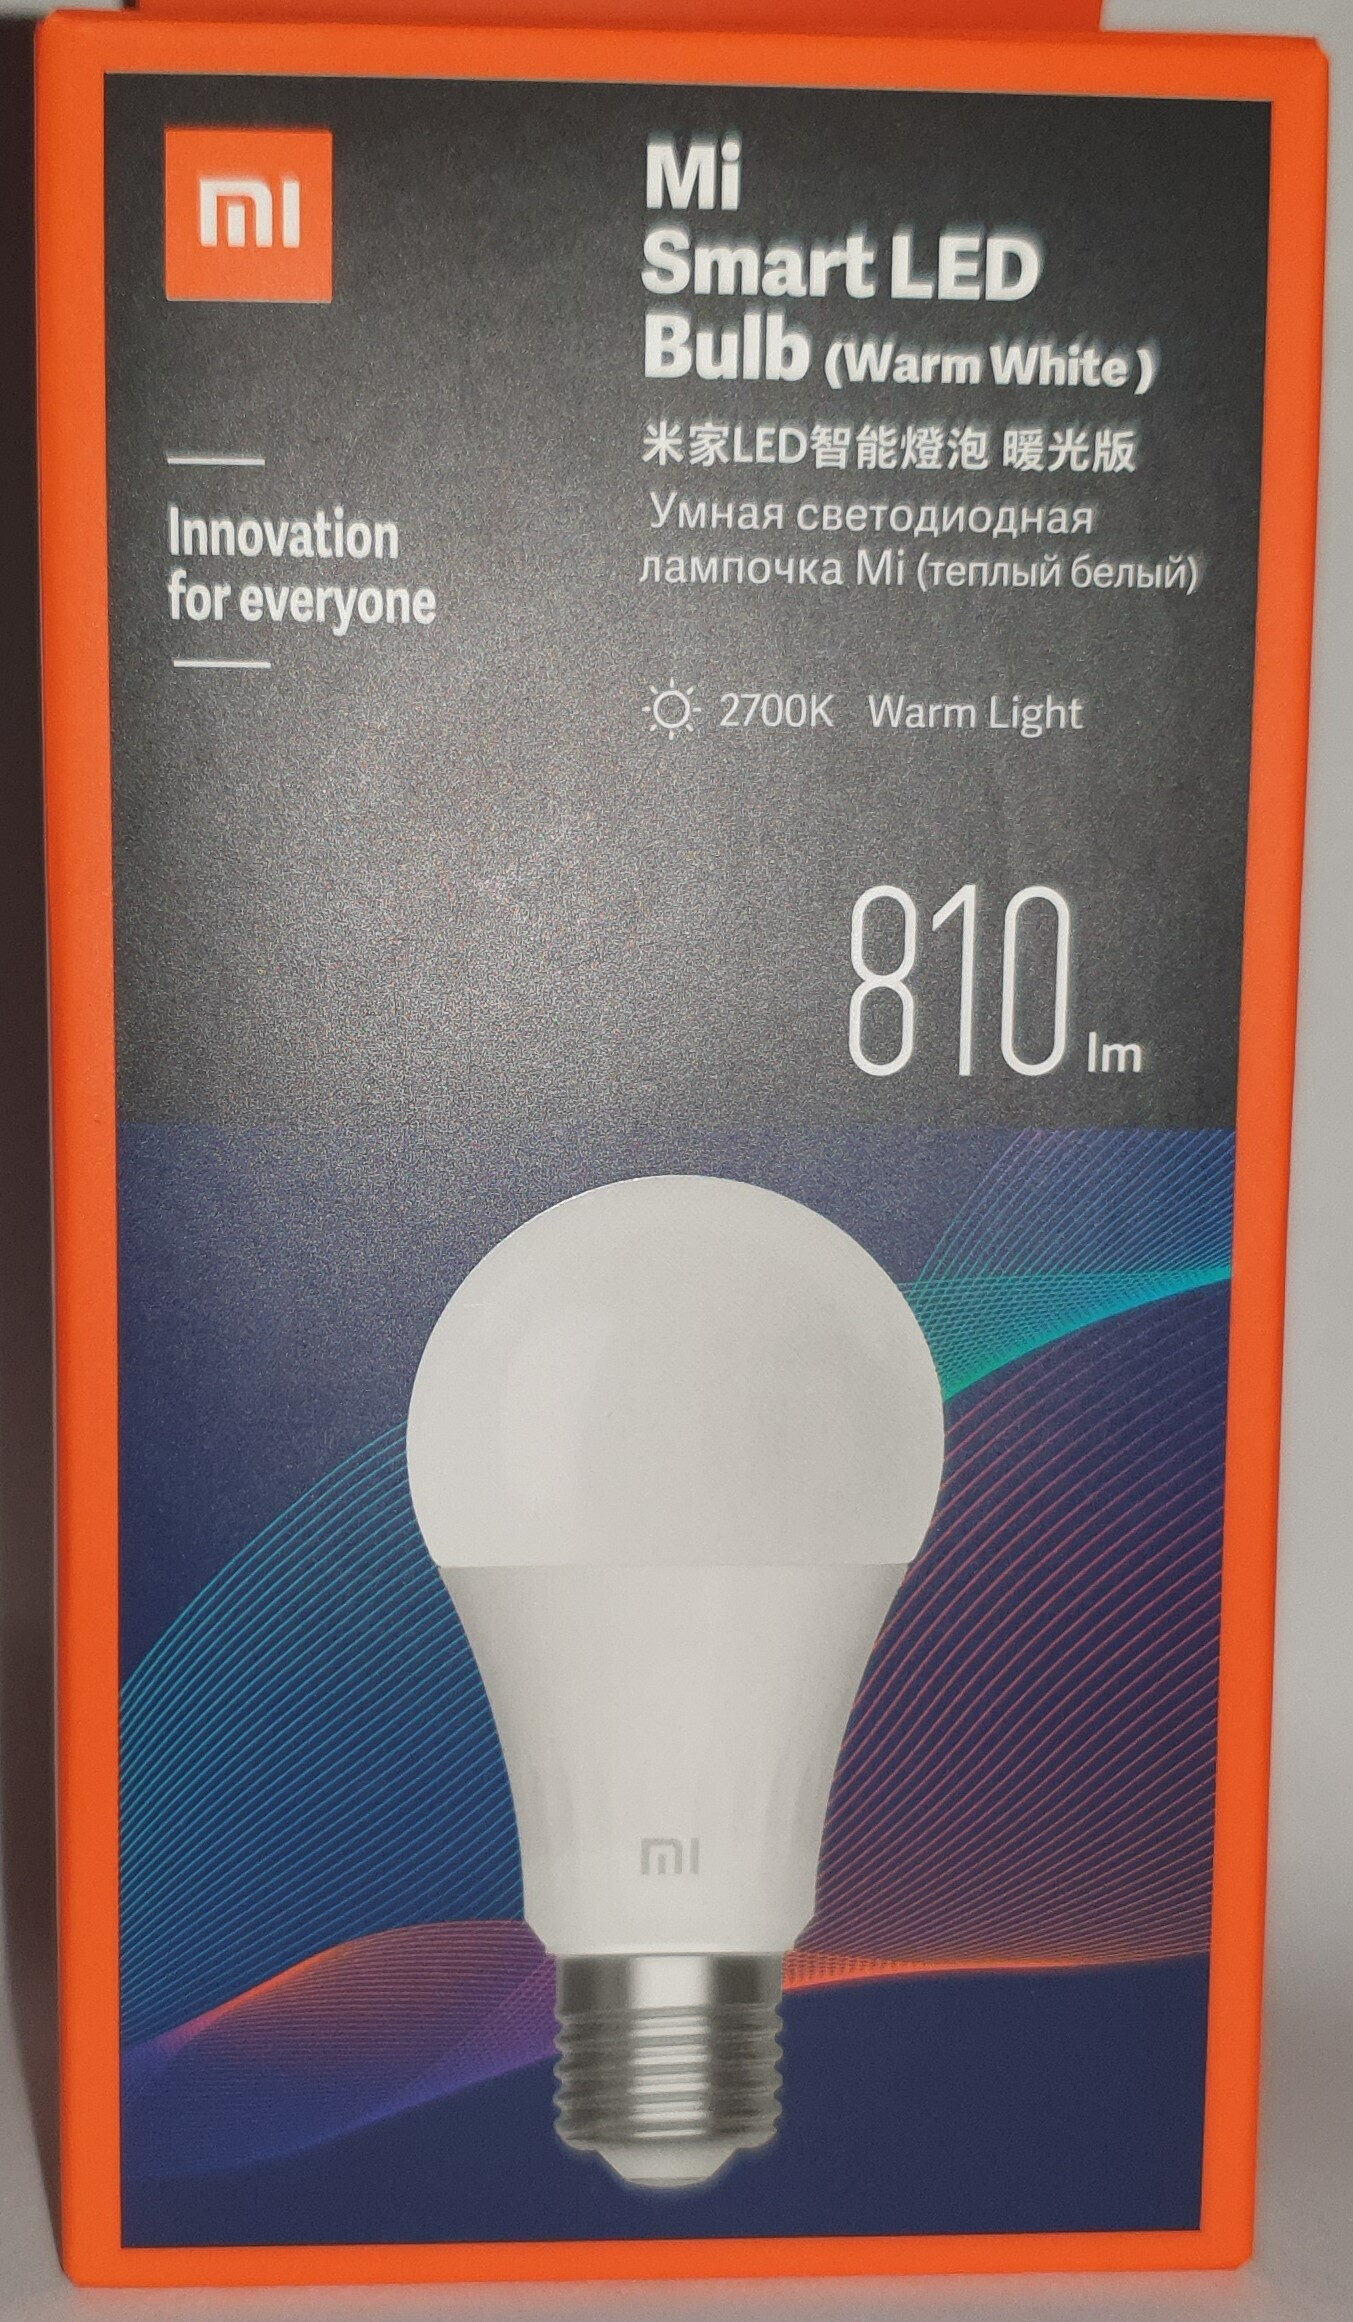 Mi Smart LED Bulb (Warm White) - Product - ru